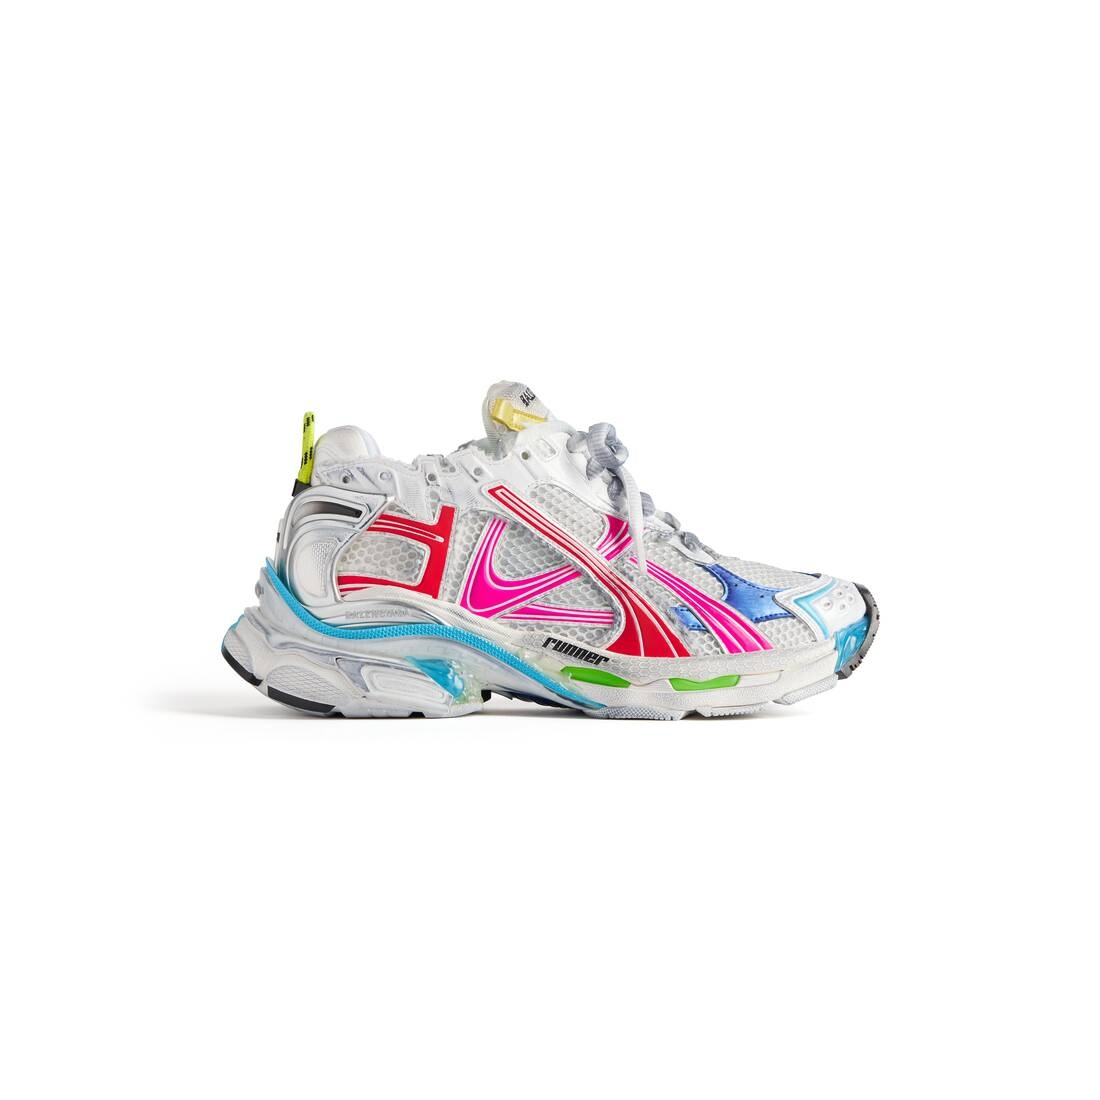 Women's Runner Sneaker in Multicolored - 1